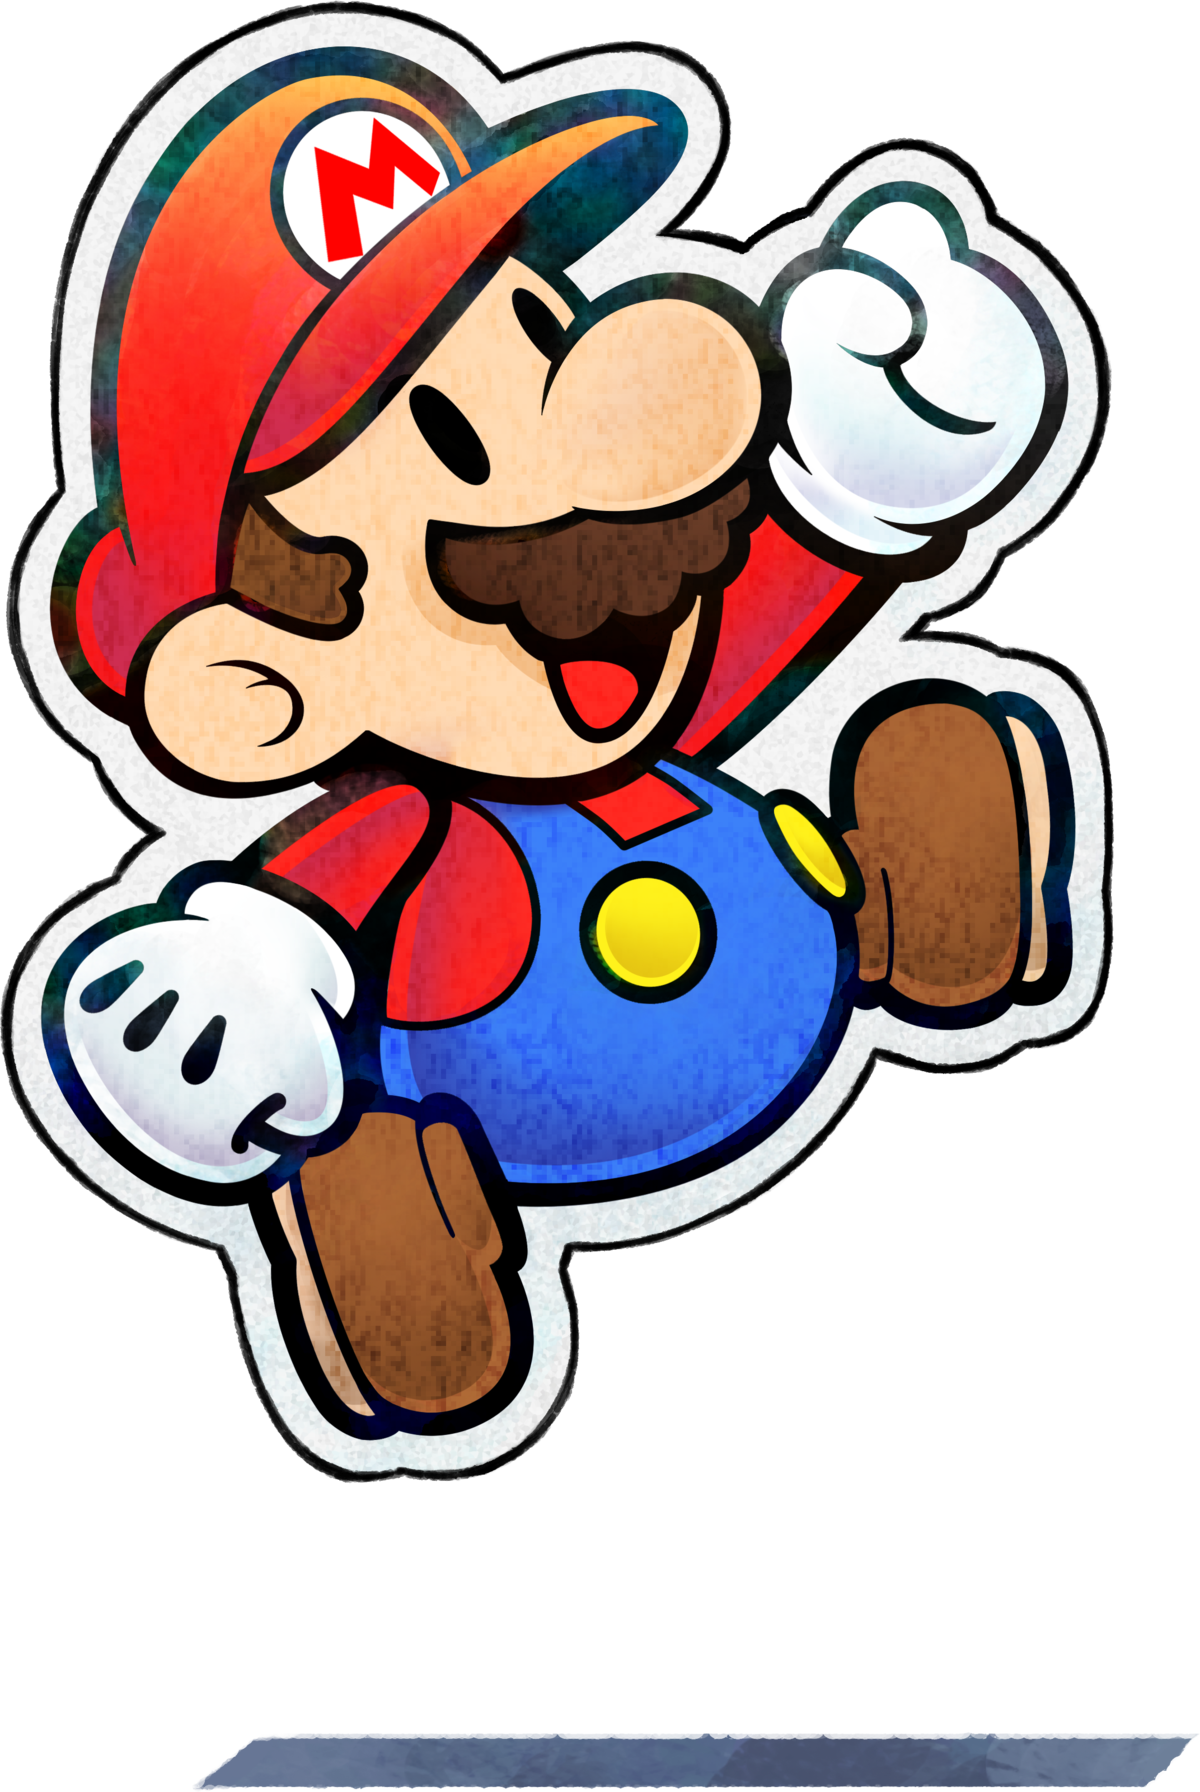 Paper Mario (character) - Super Mario Wiki, the Mario encyclopedia